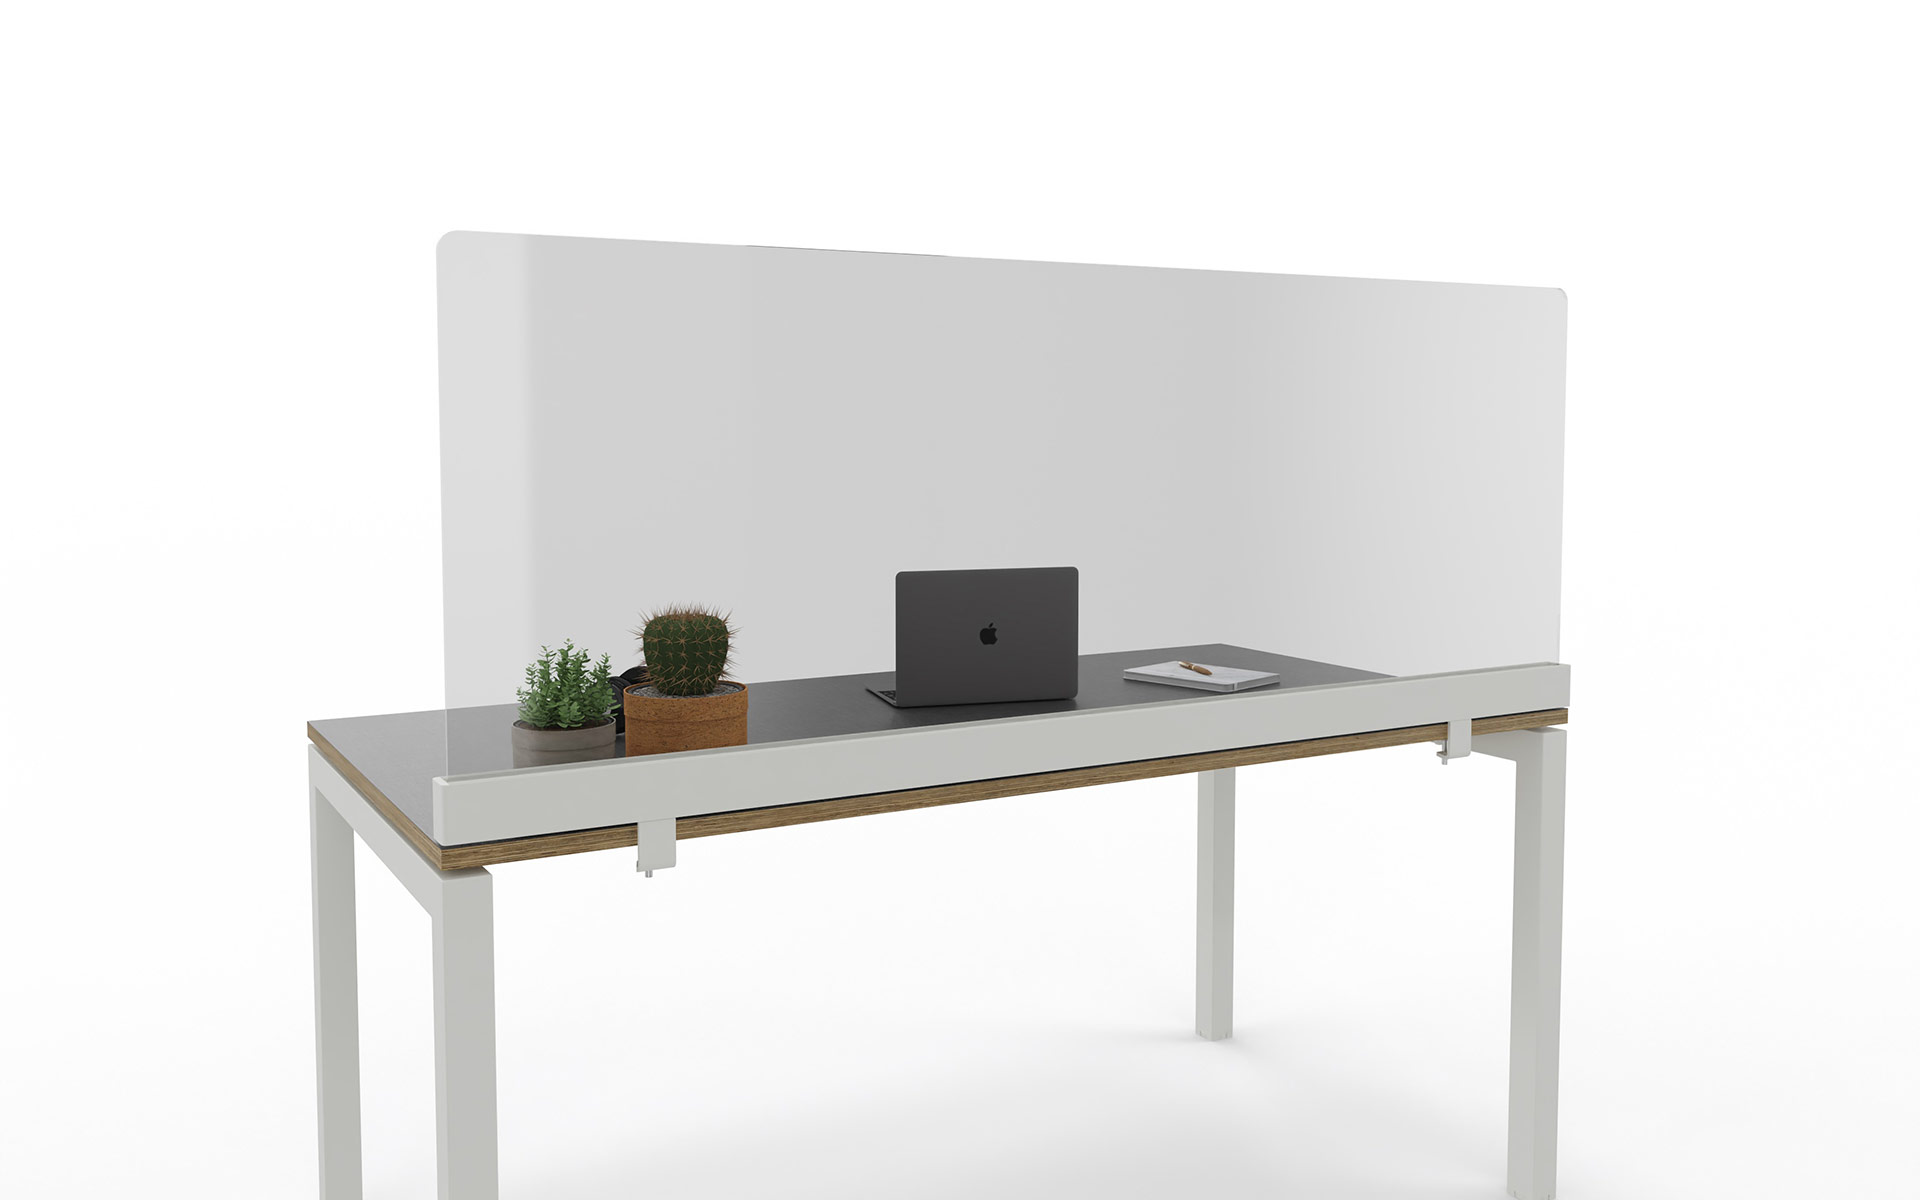 Magnuson Group’s NEW PORT HIGH Desk Partition